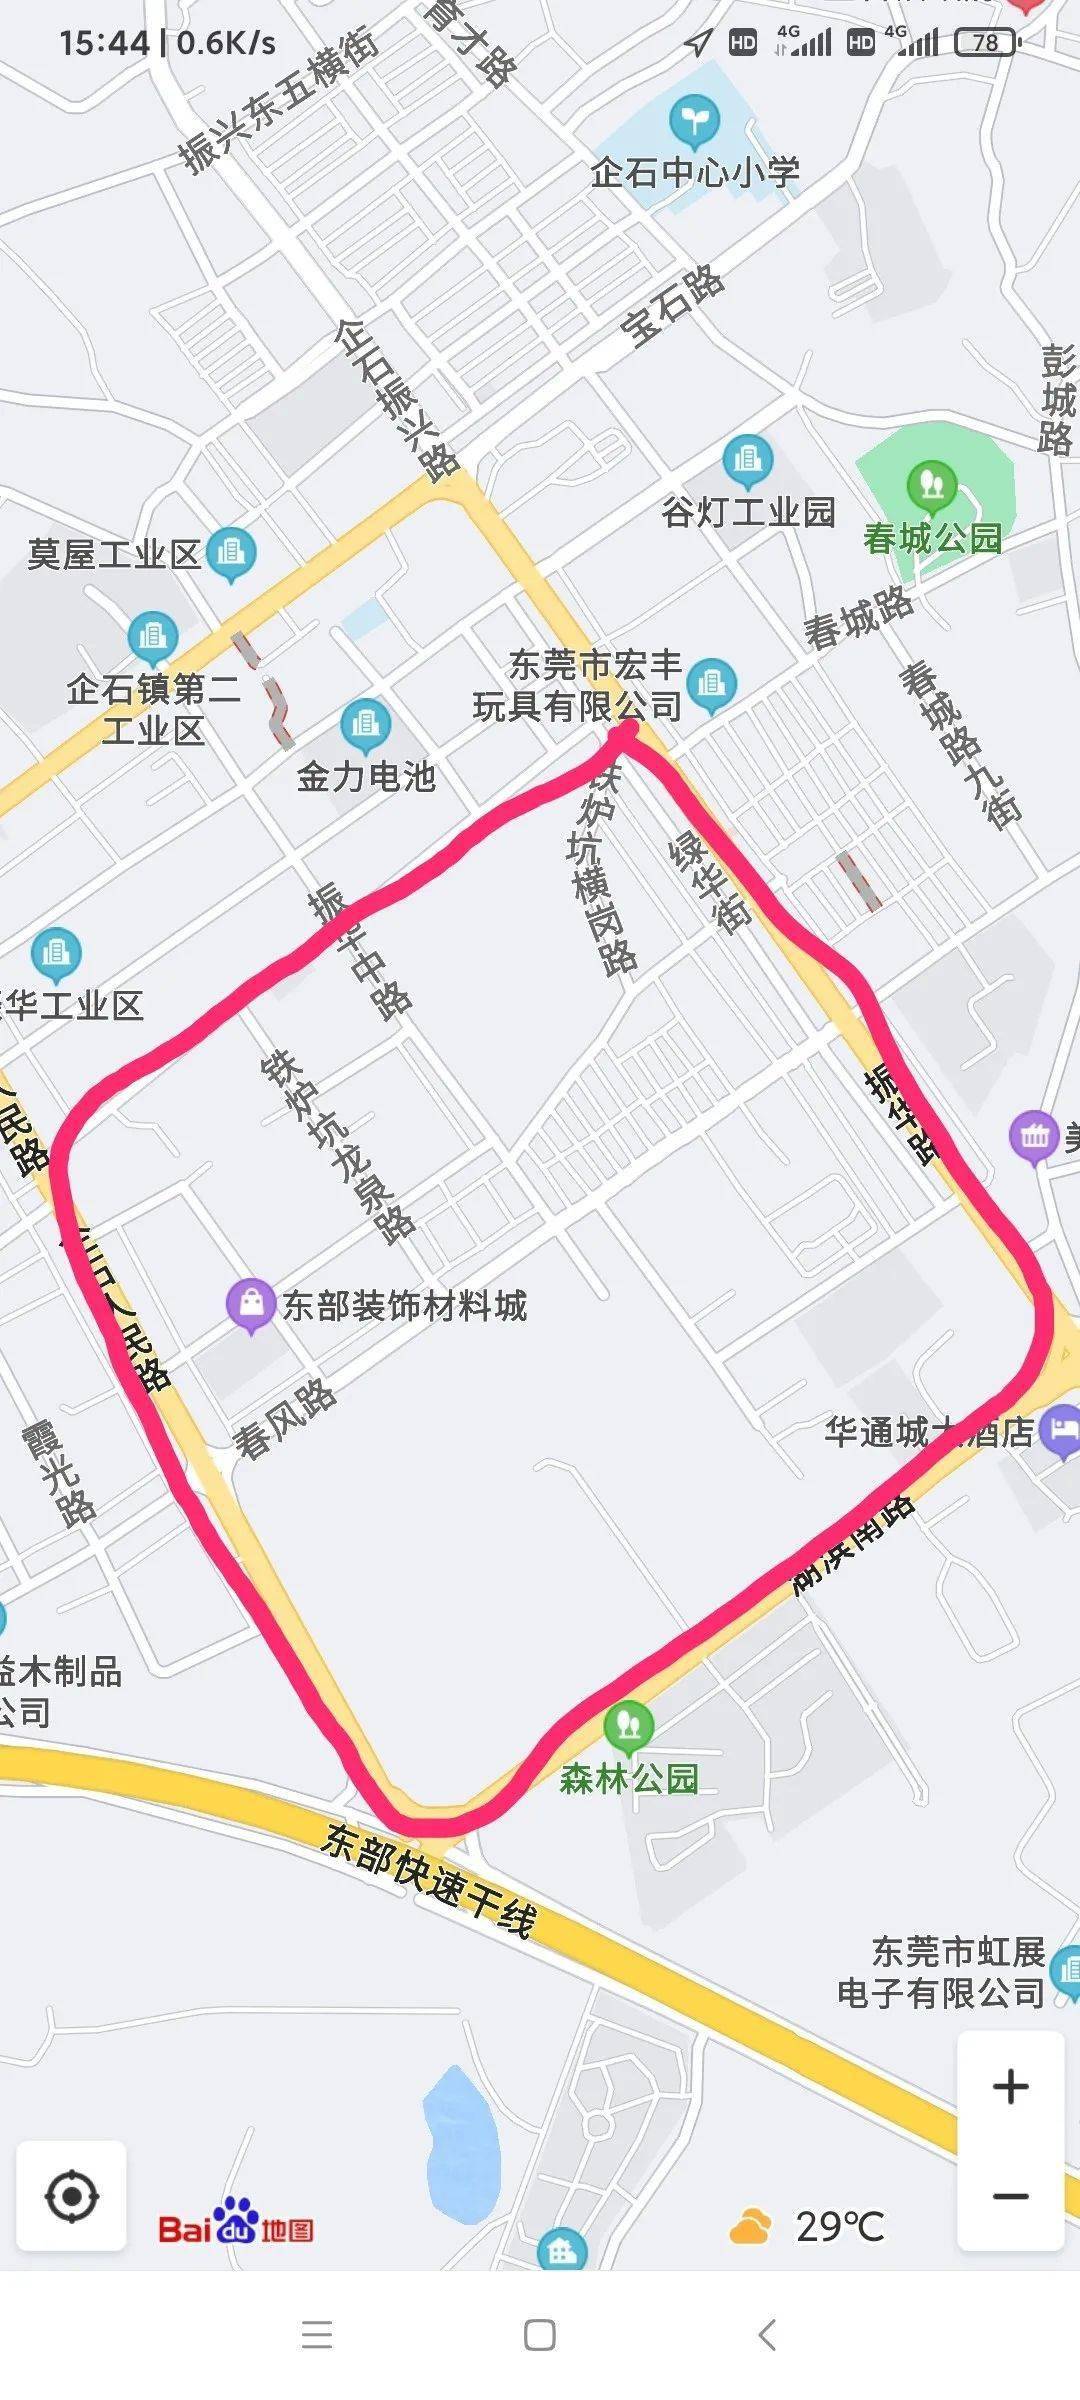 jbo竞博官网-
12月13日下午企石这些地方将停水！